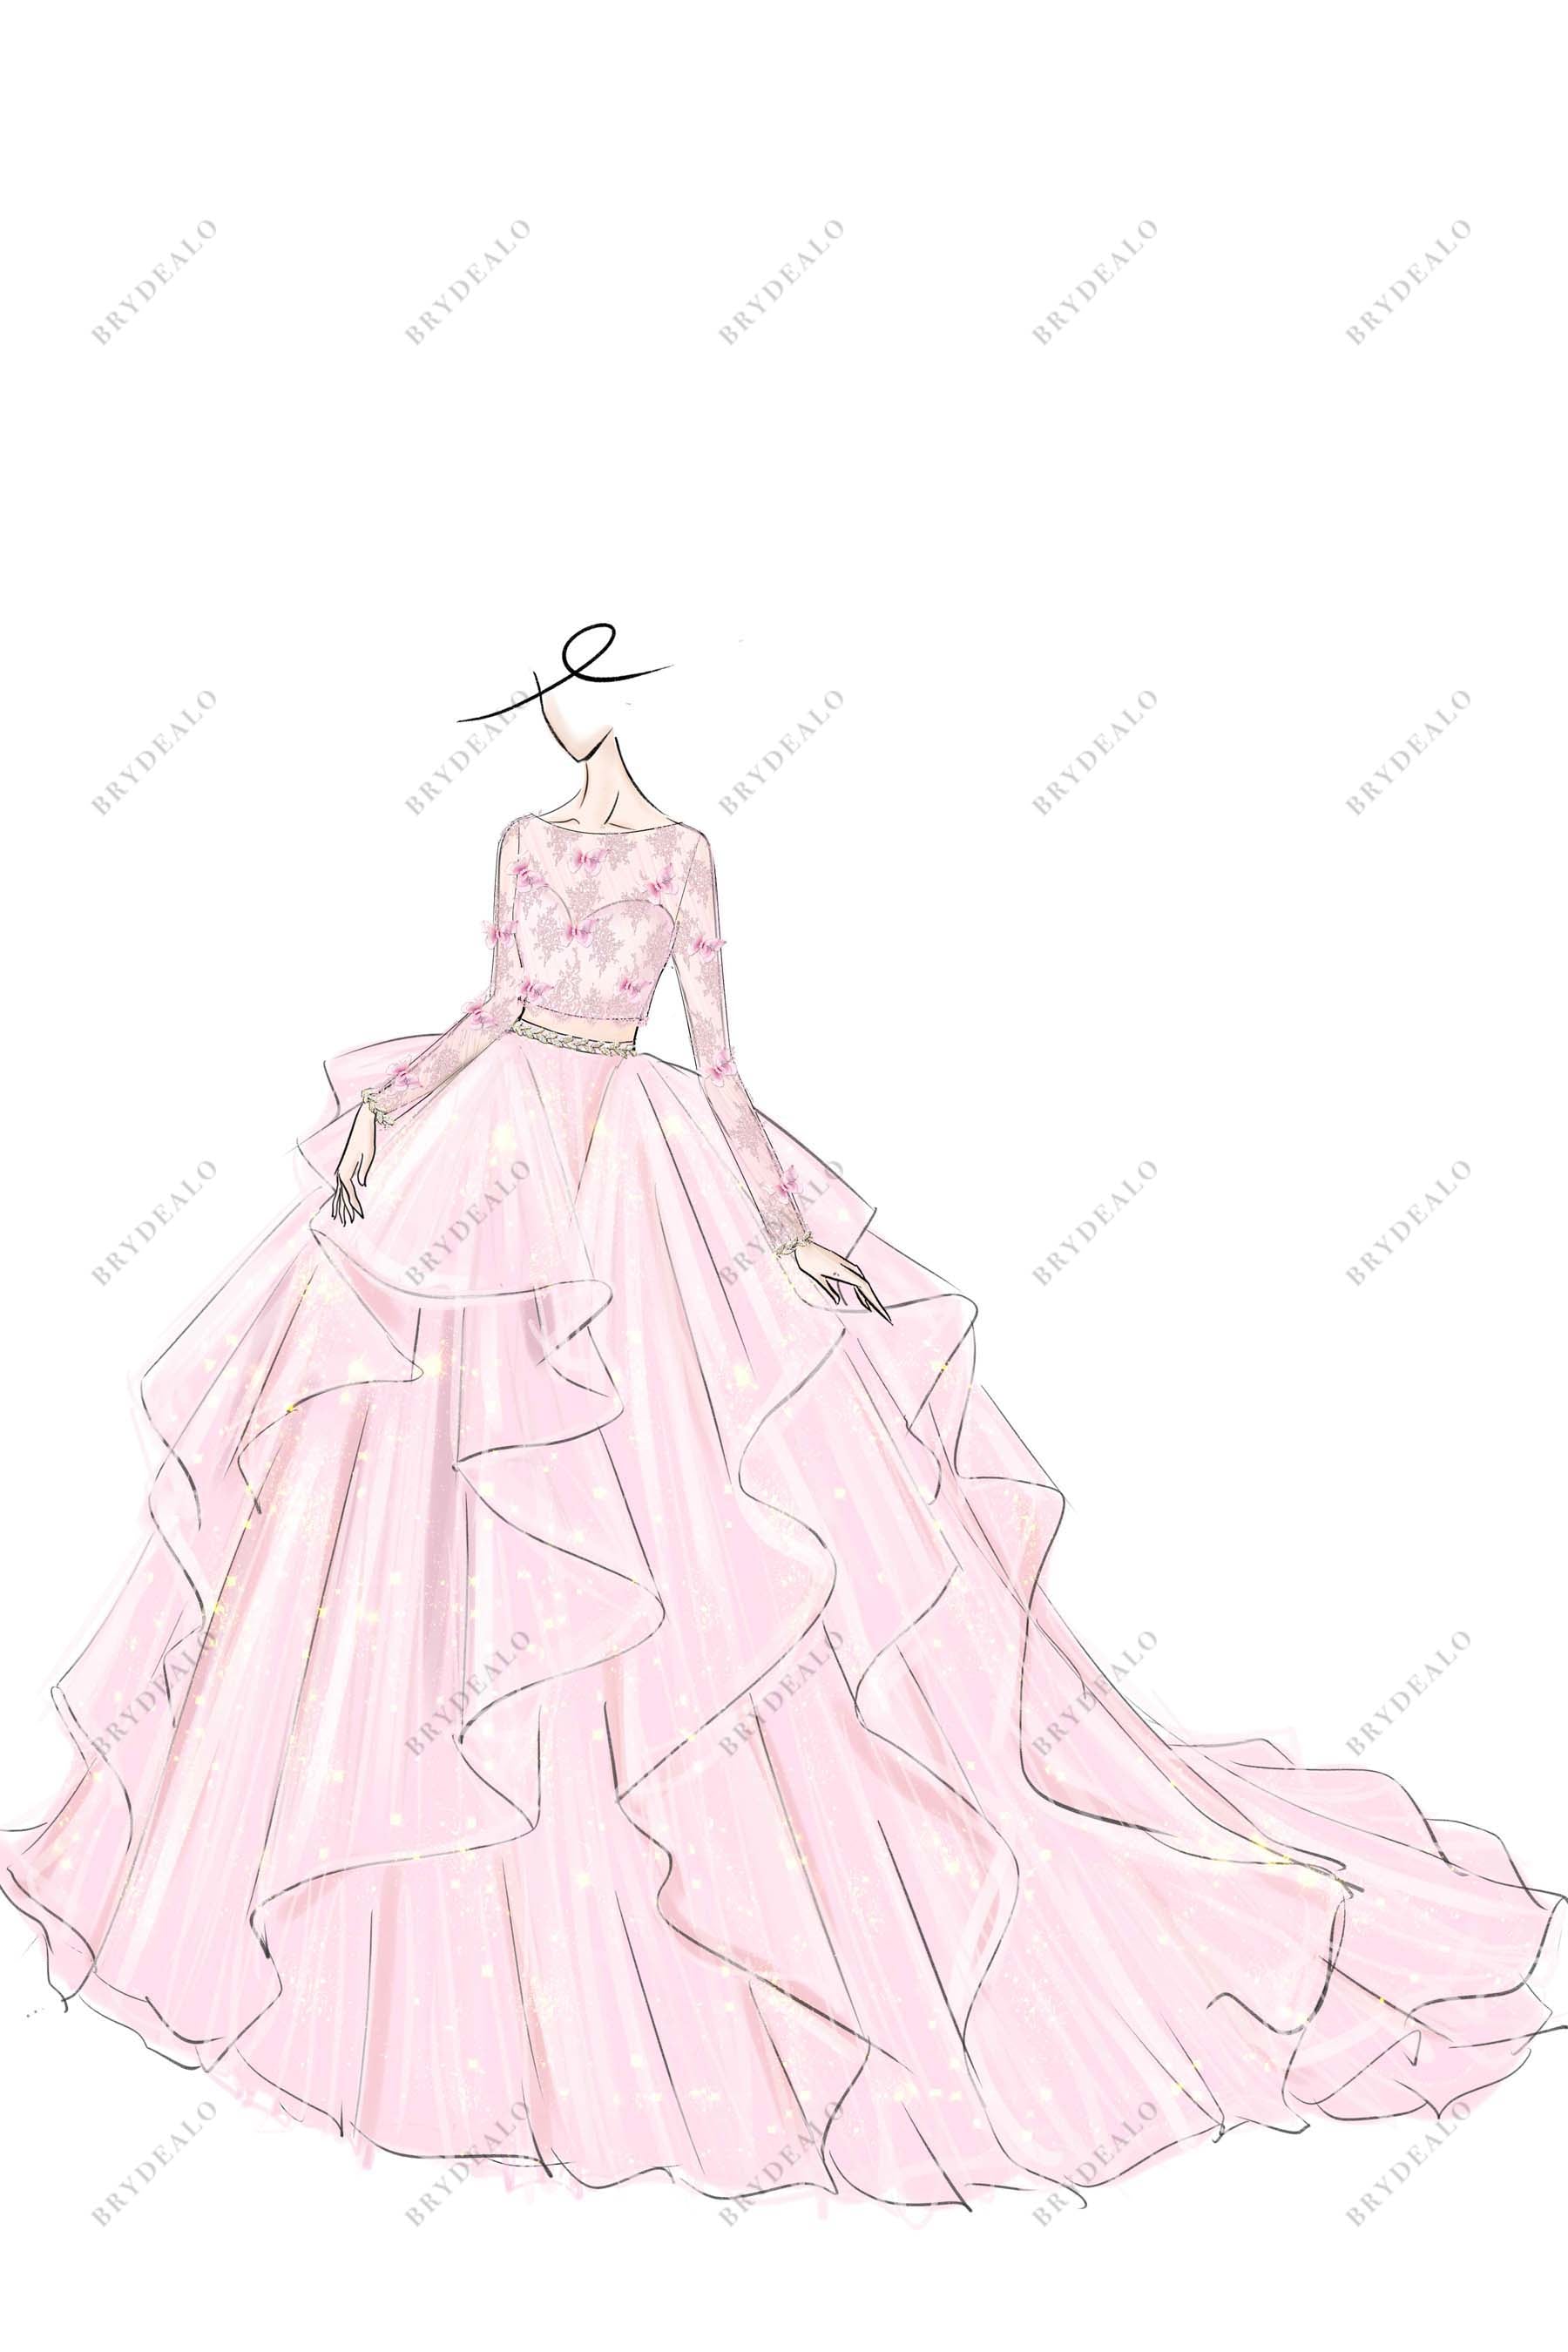 Lace Dress Drawing Best Sale - www.festivalrir.com 1694813742